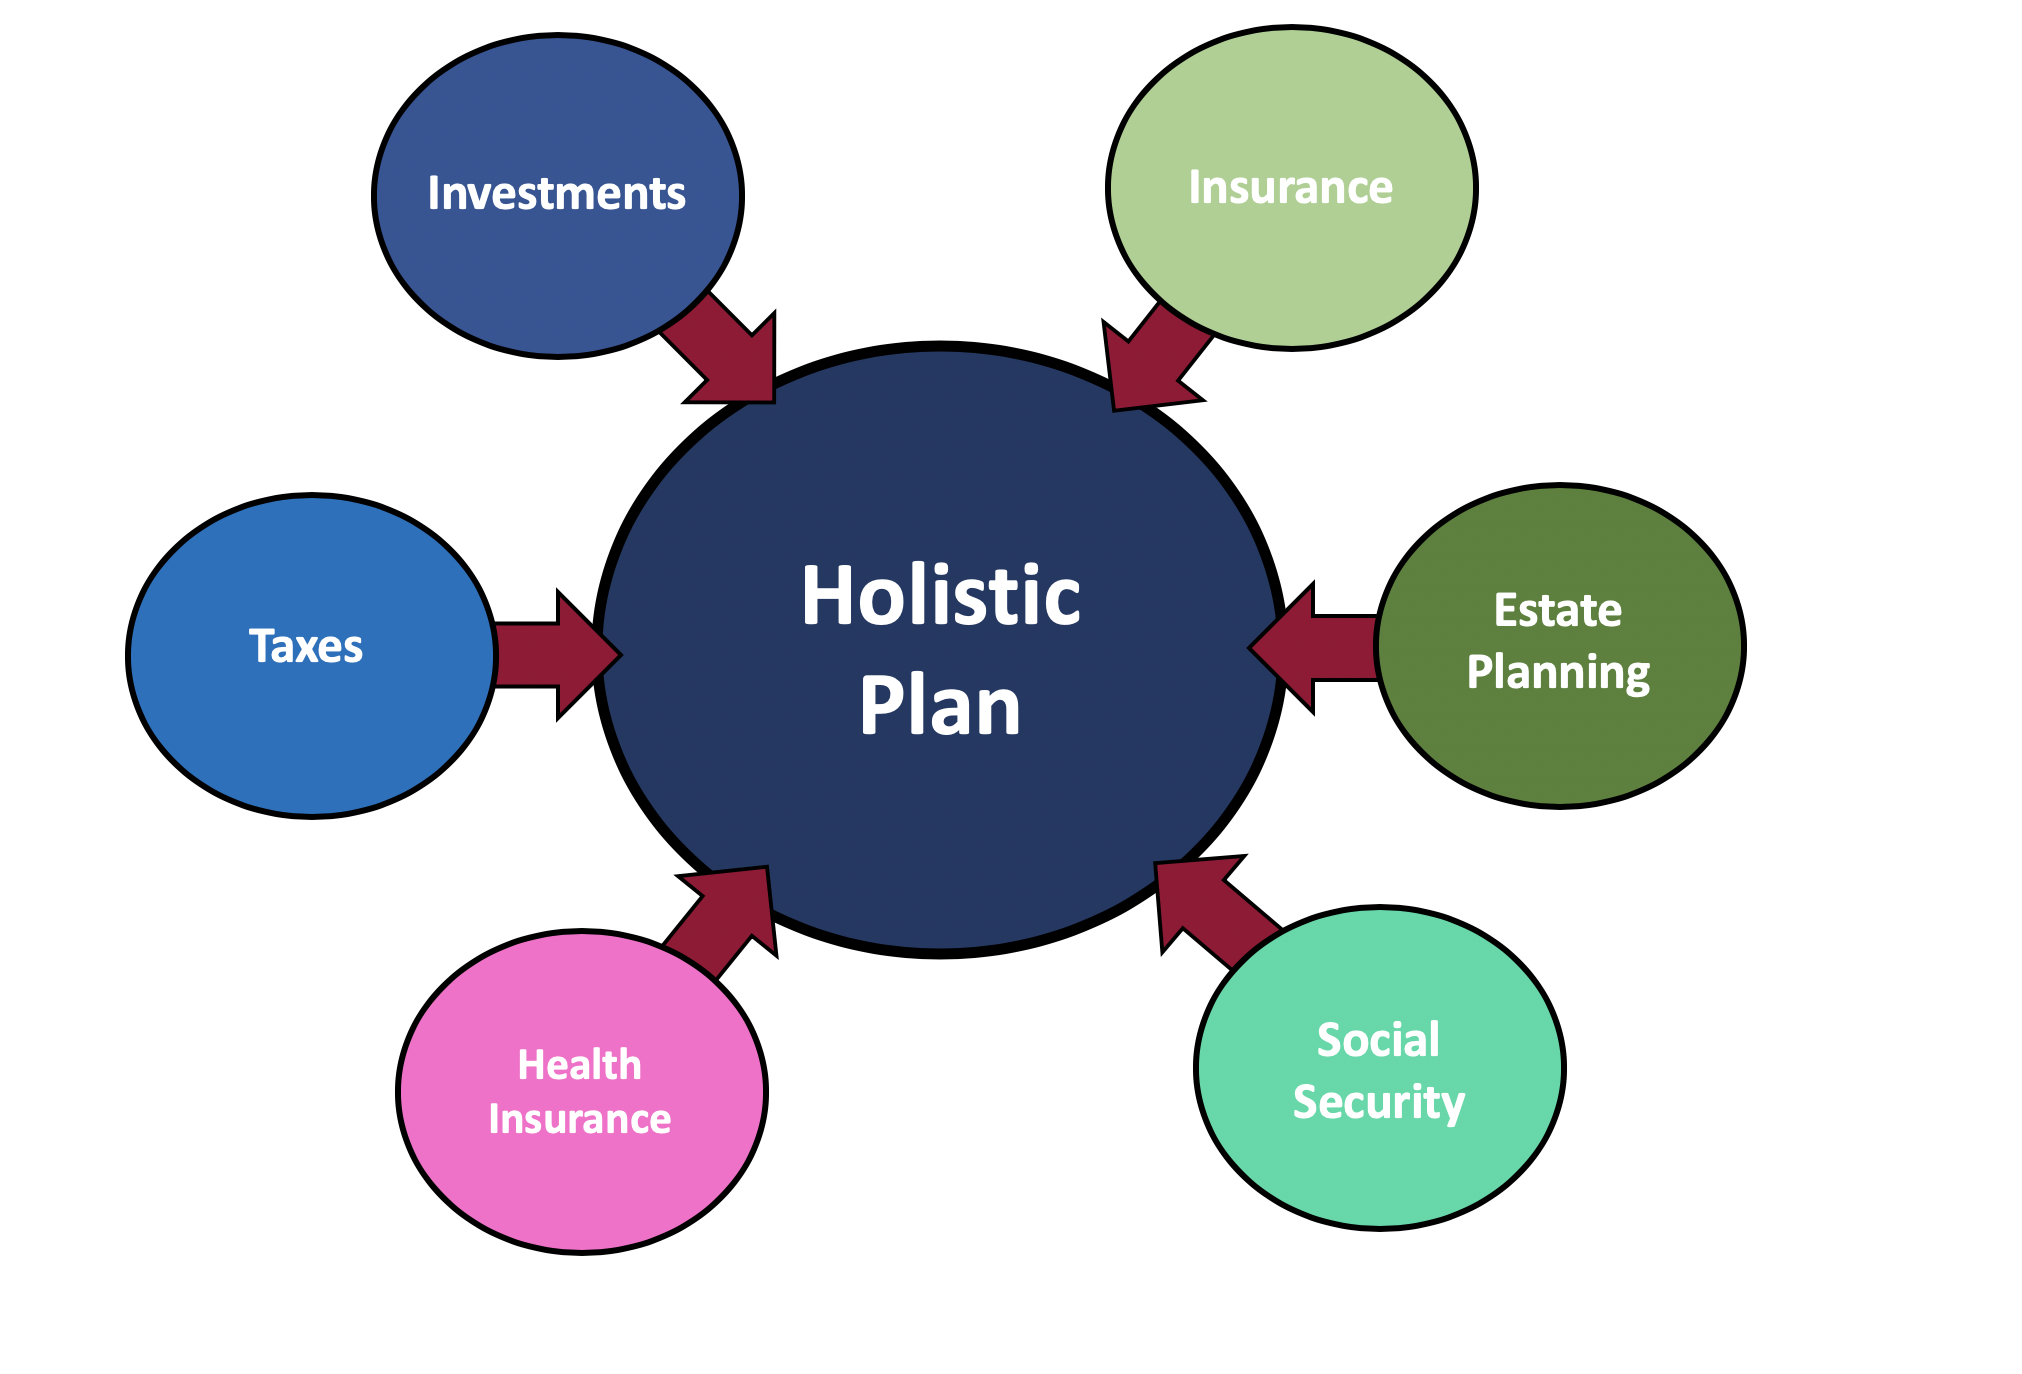 Our Holistic Plan